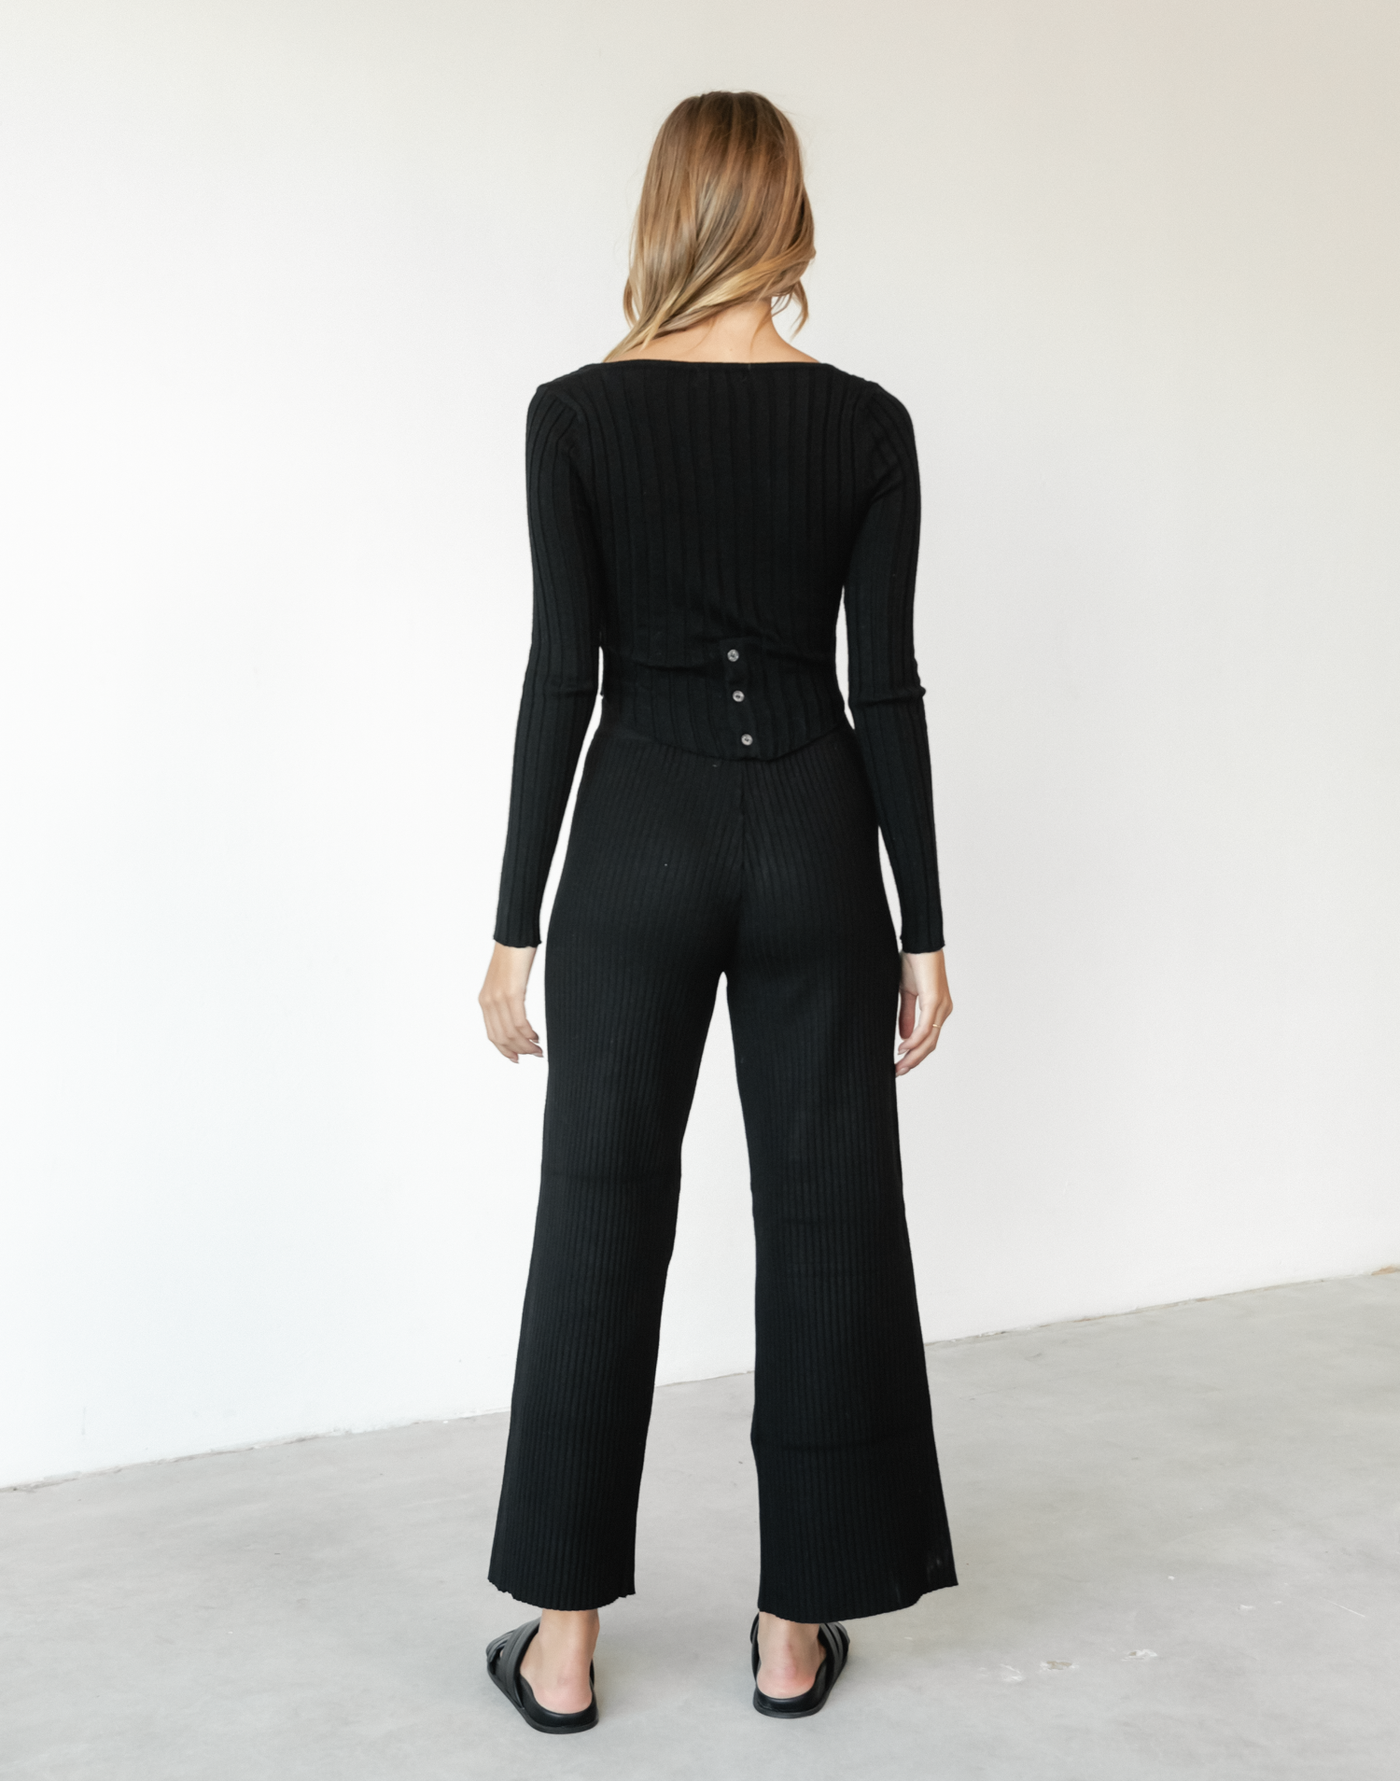 Maloney Pants (Black) -Black Wide Leg Pants - Women's Pants - Charcoal Clothing